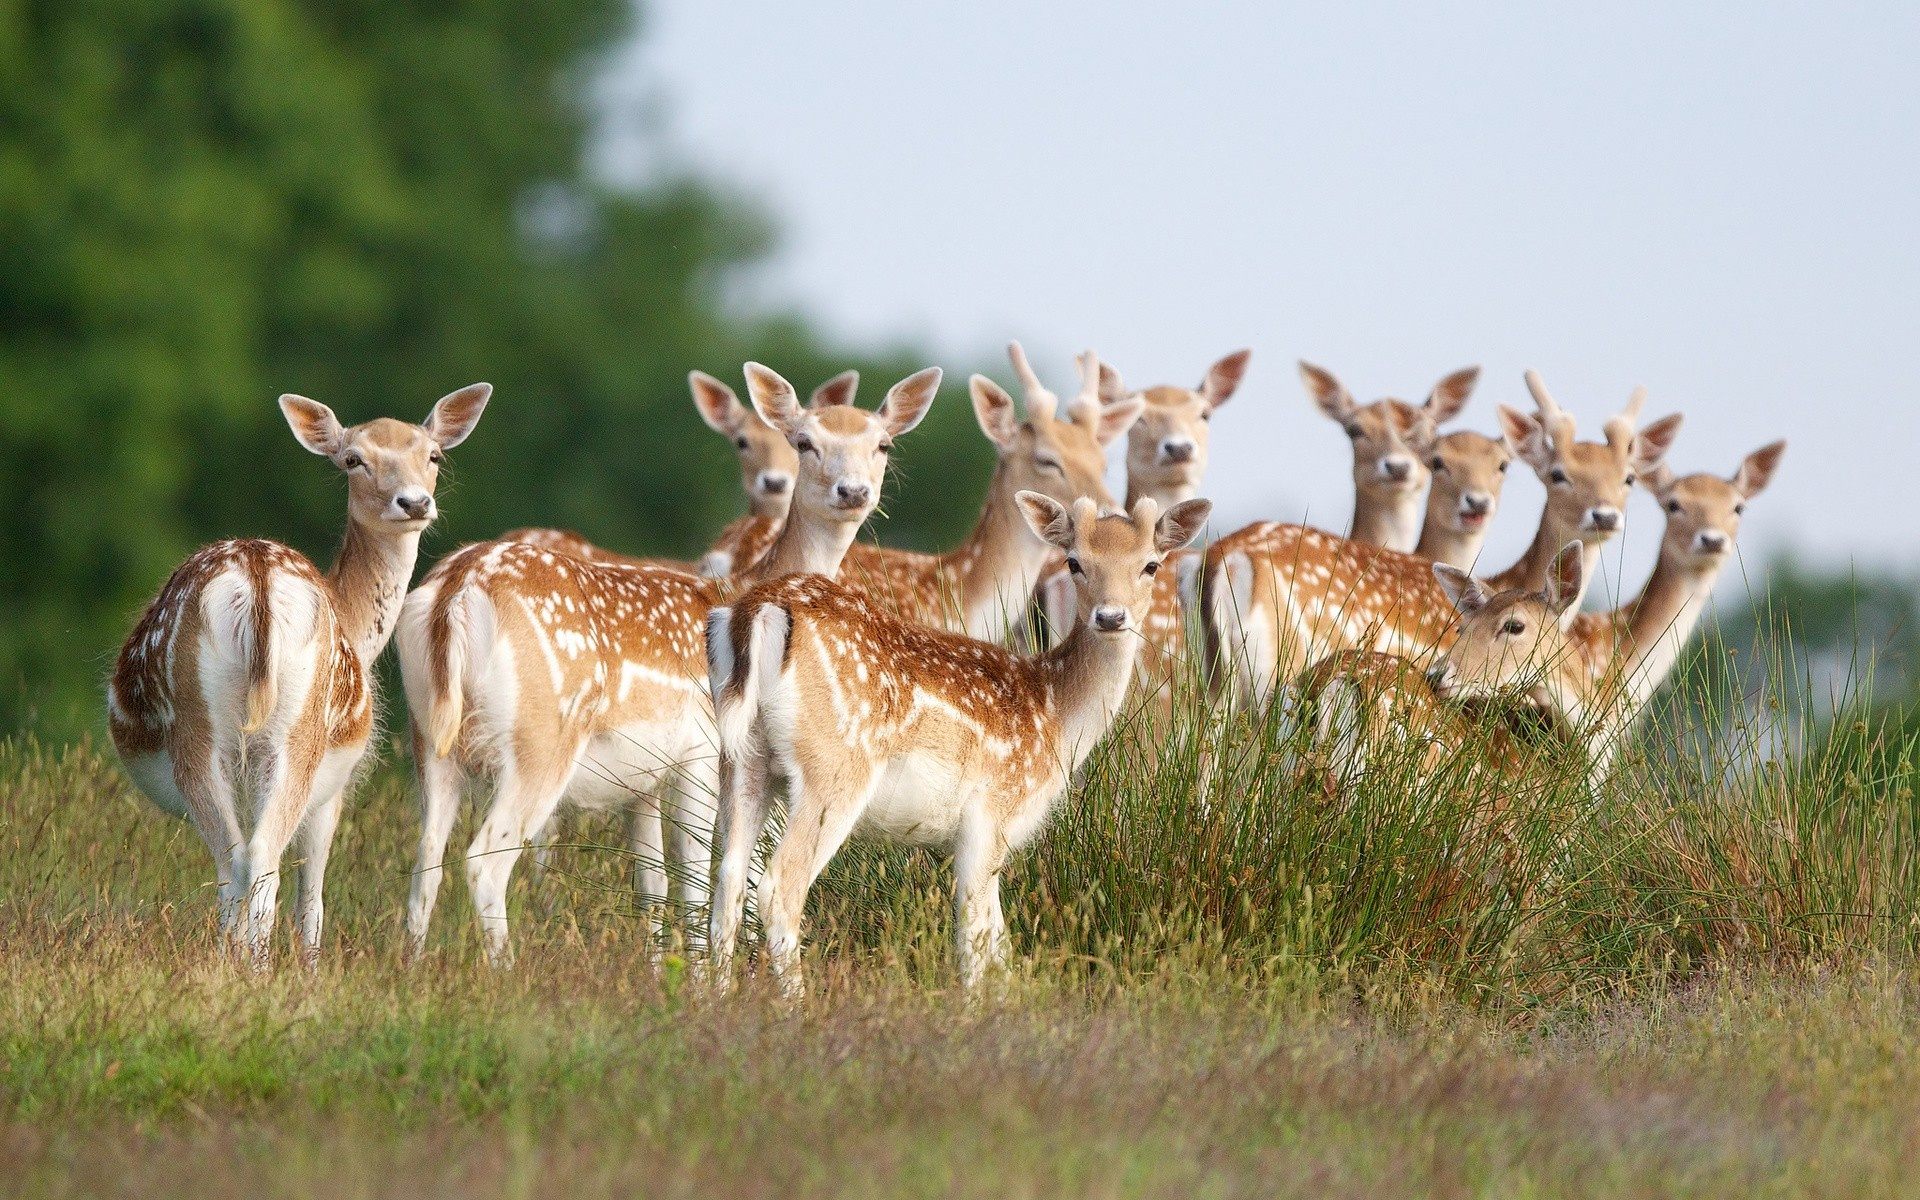 Do deer live in groups?